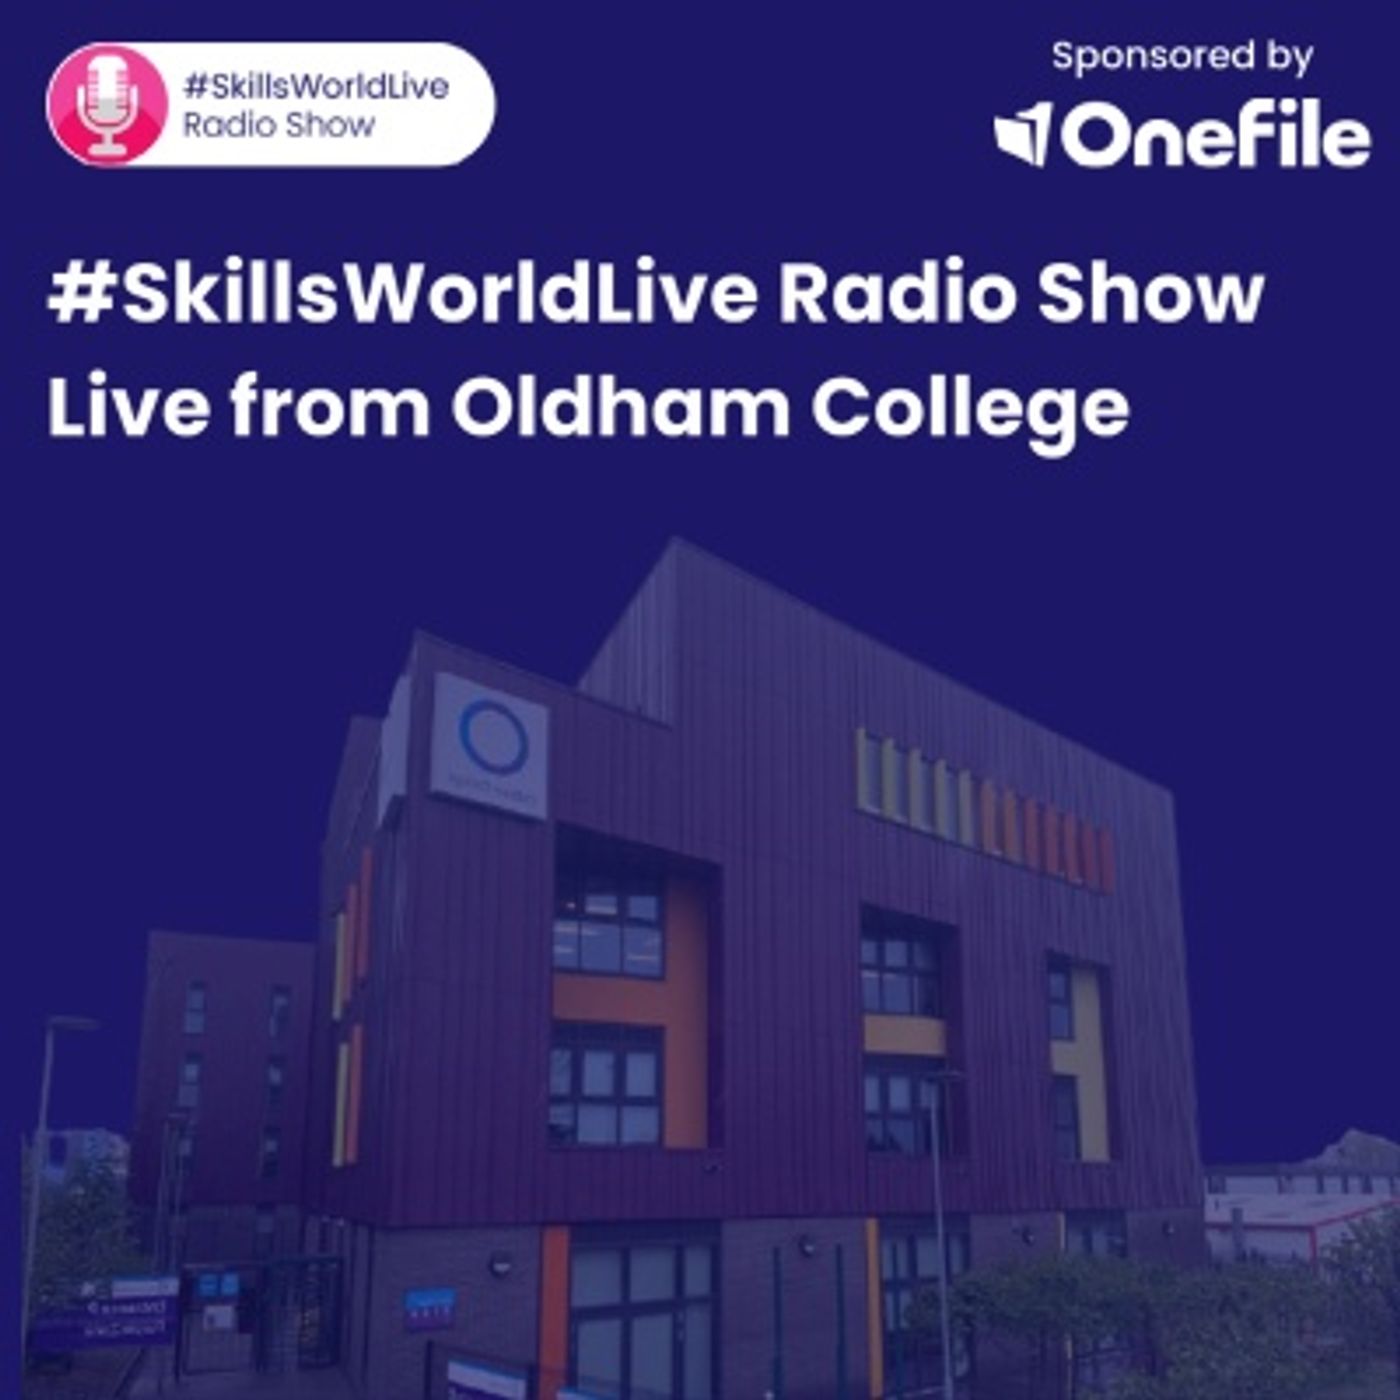 #SkillsWorldLive Radio Show on the road at Oldham College 3.17